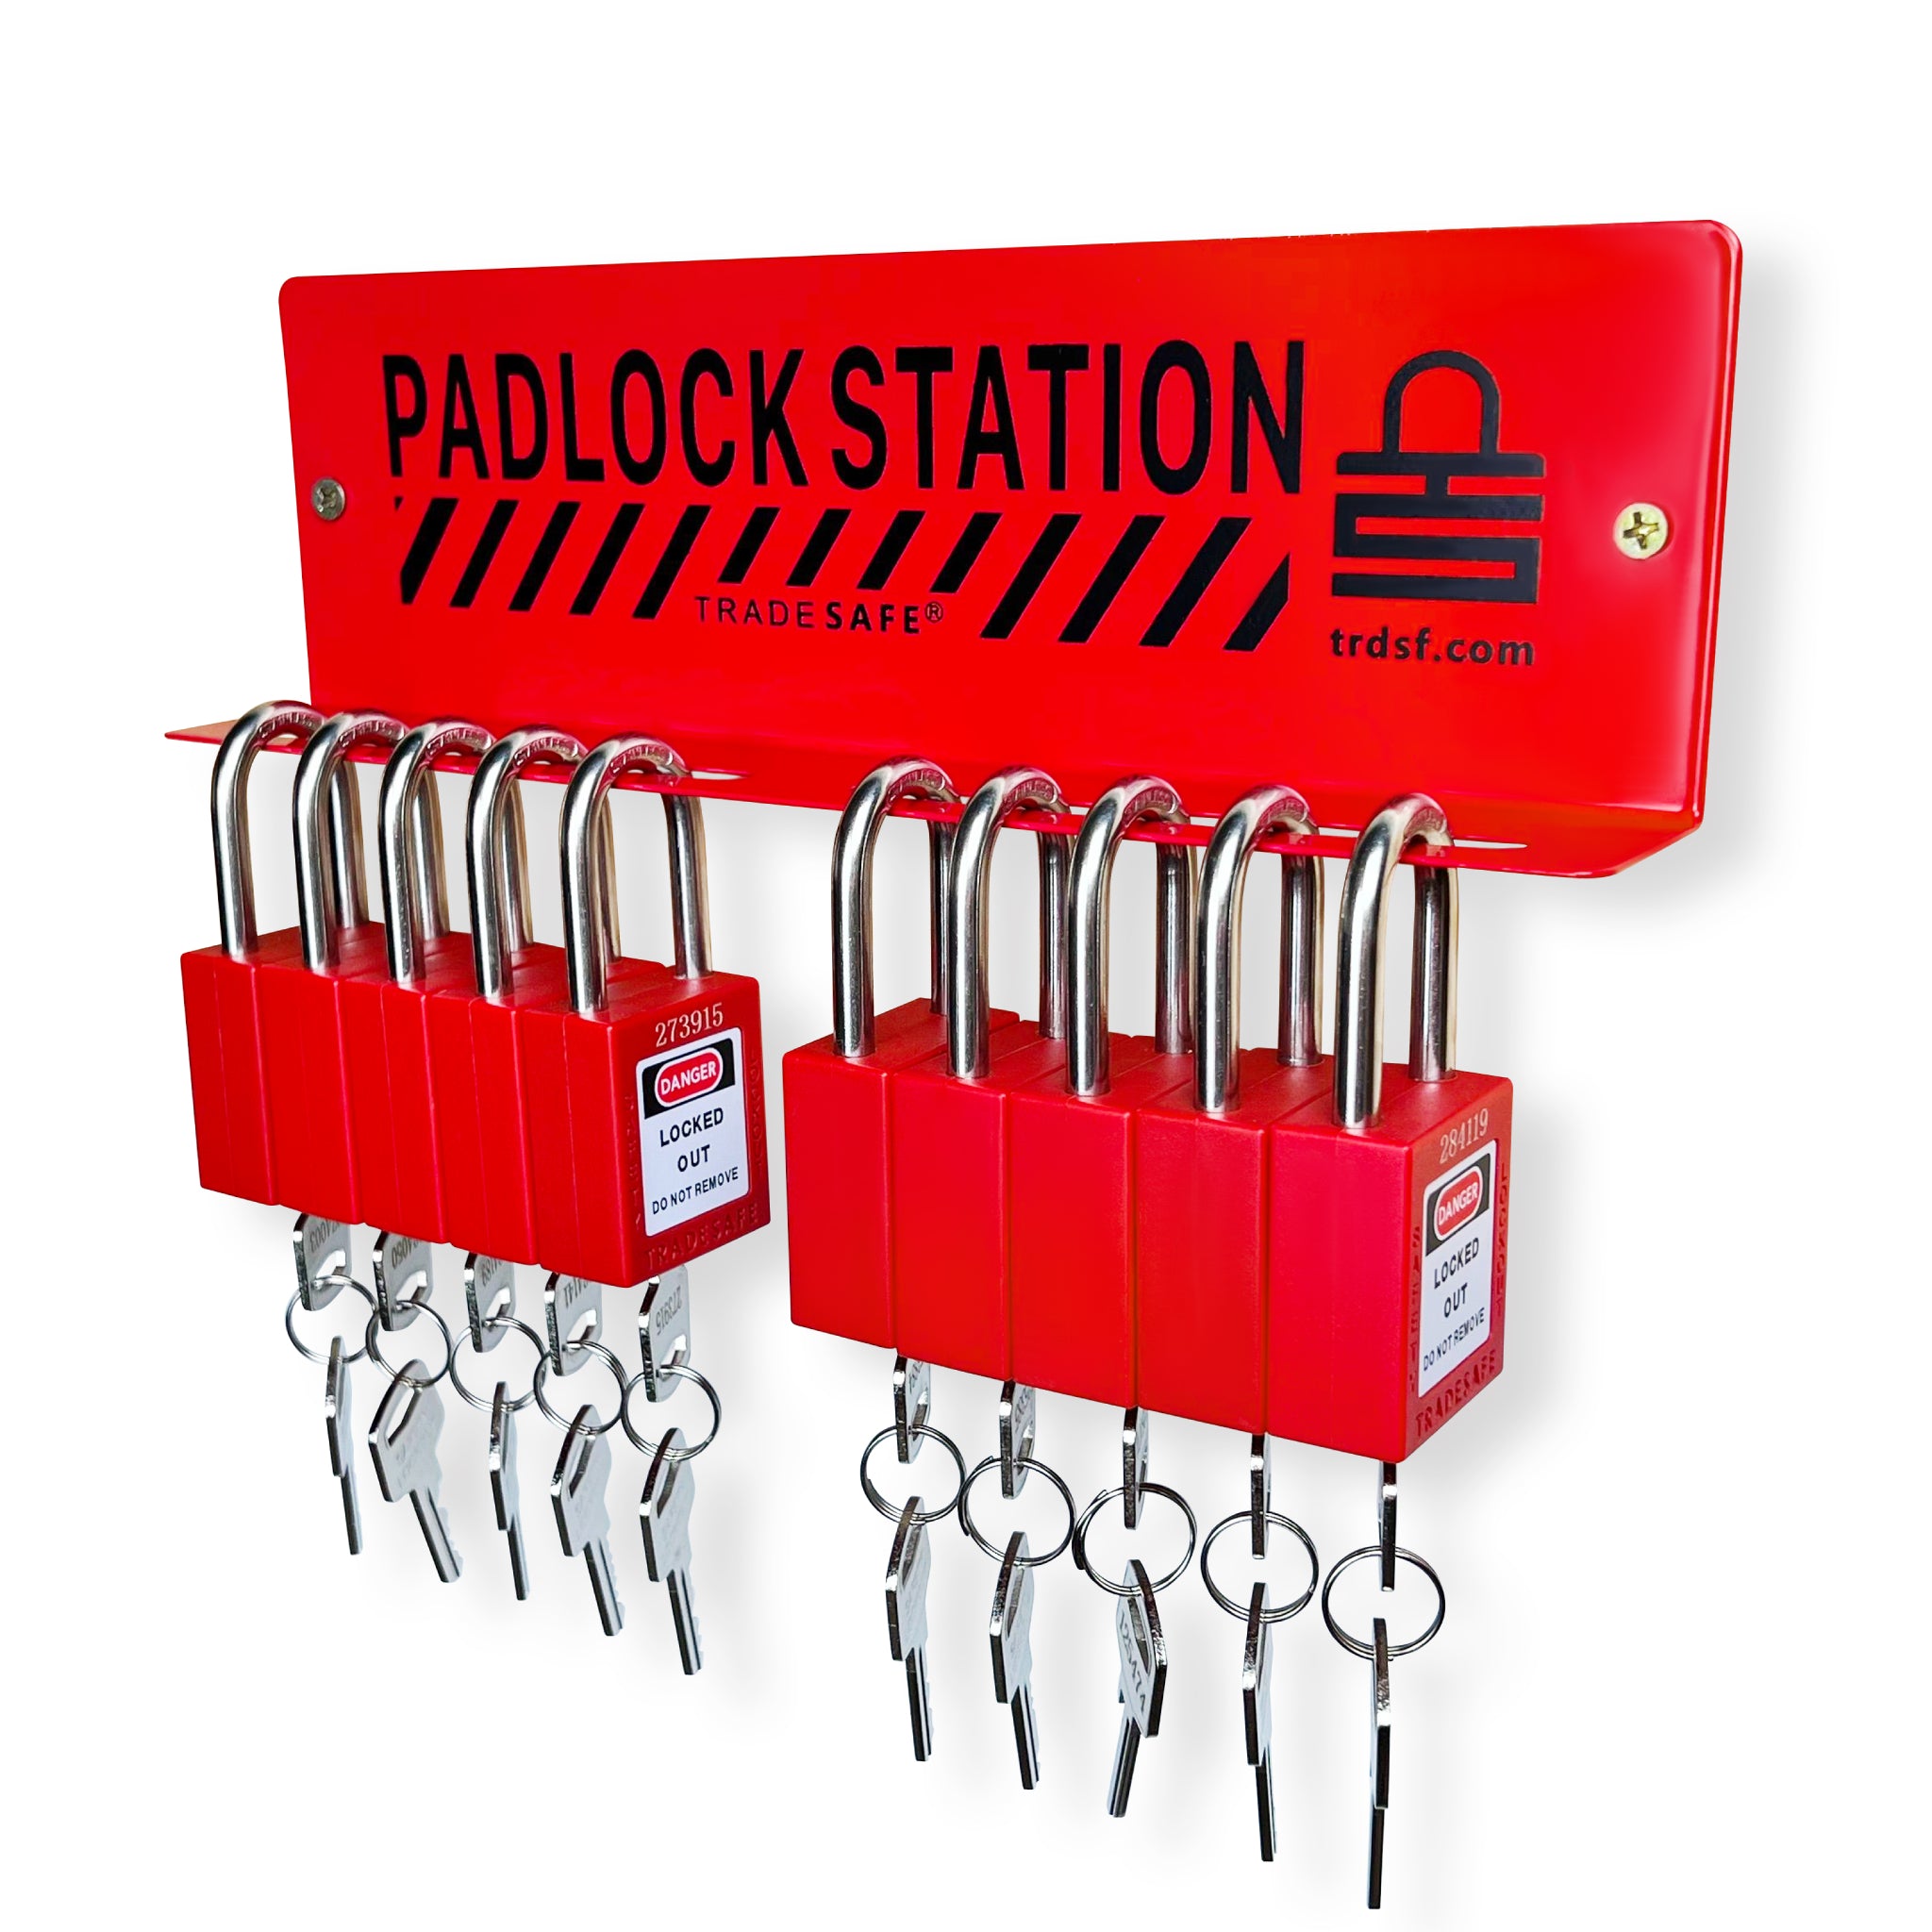 Safety Padlock Lockout Tagout Station – Fits 10 Padlocks – LOTO Locks Included